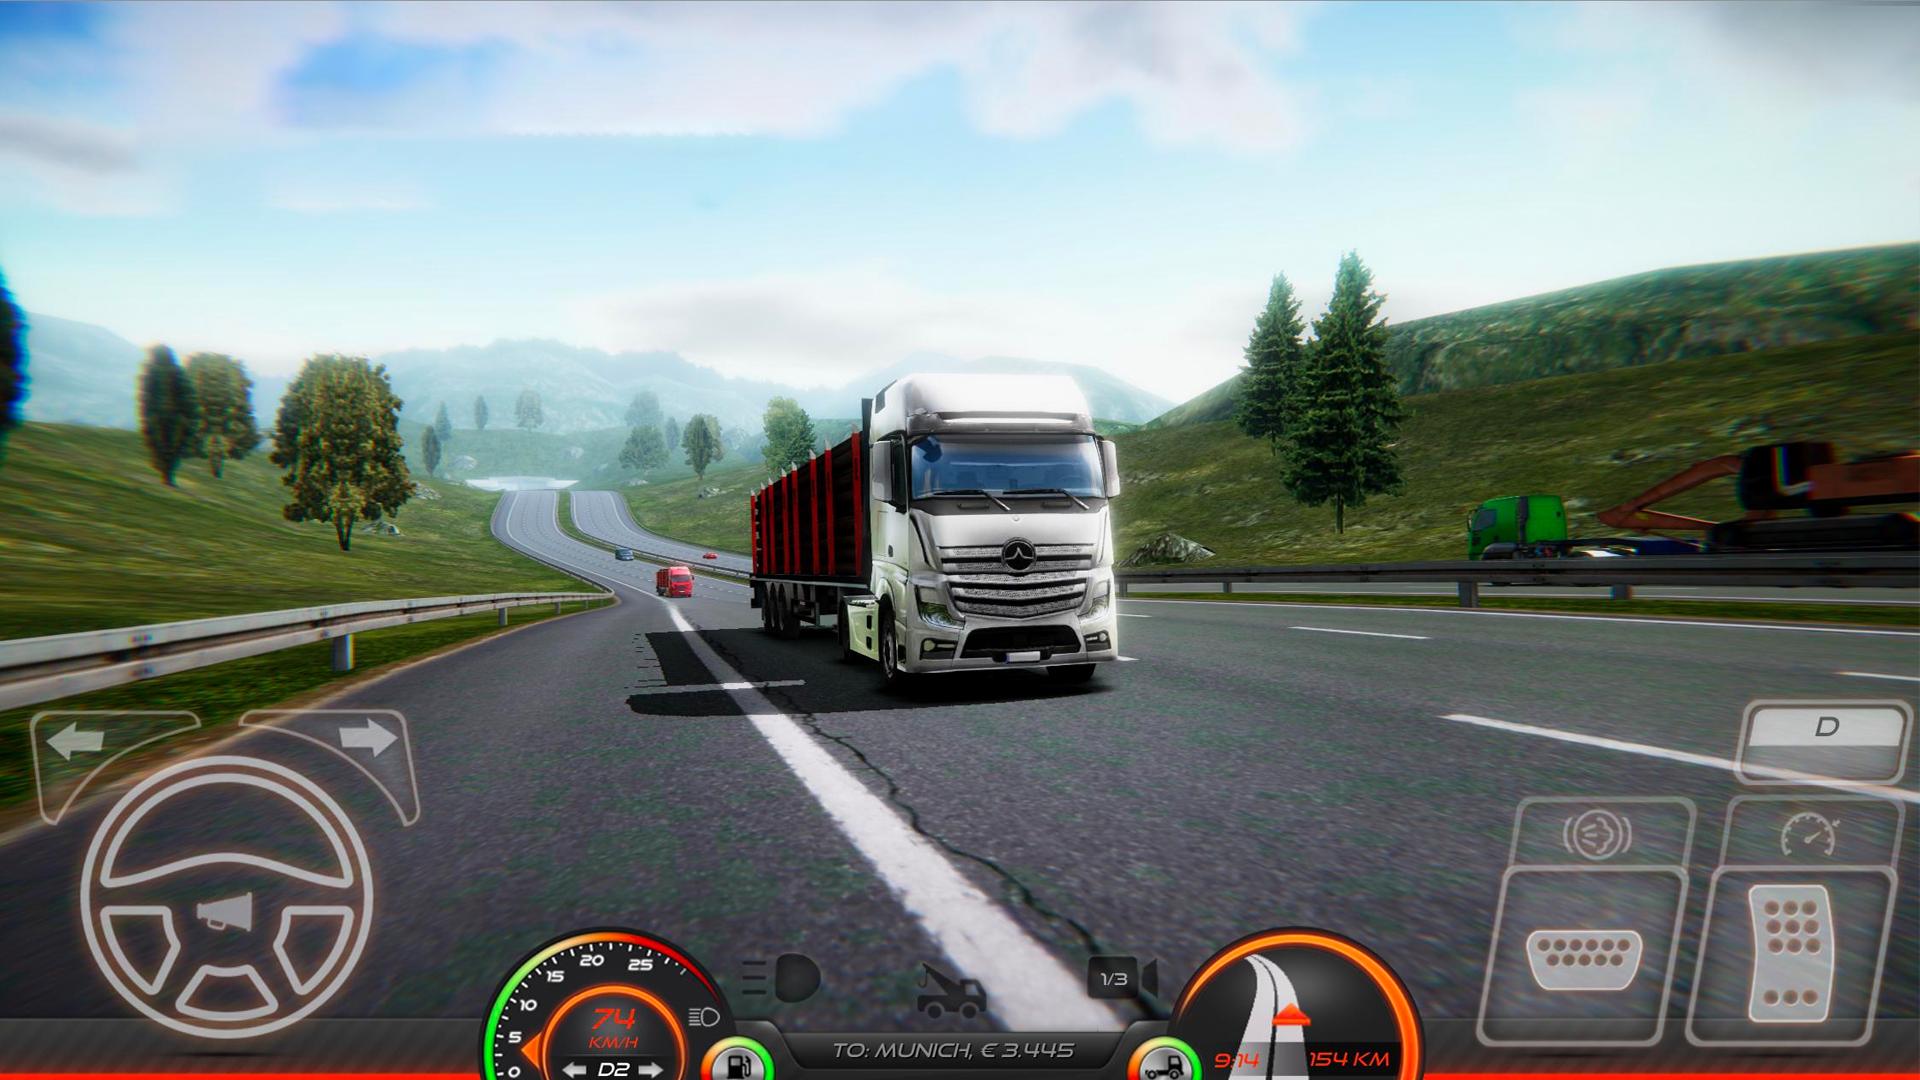 Взломанная игры truck simulator 2. Симулятор грузовика Trucker of Europe. Трак симулятор 3 на андроид. Симулятор фуры 2 Европа. Трак симулятор Европа 2 Грузовики.